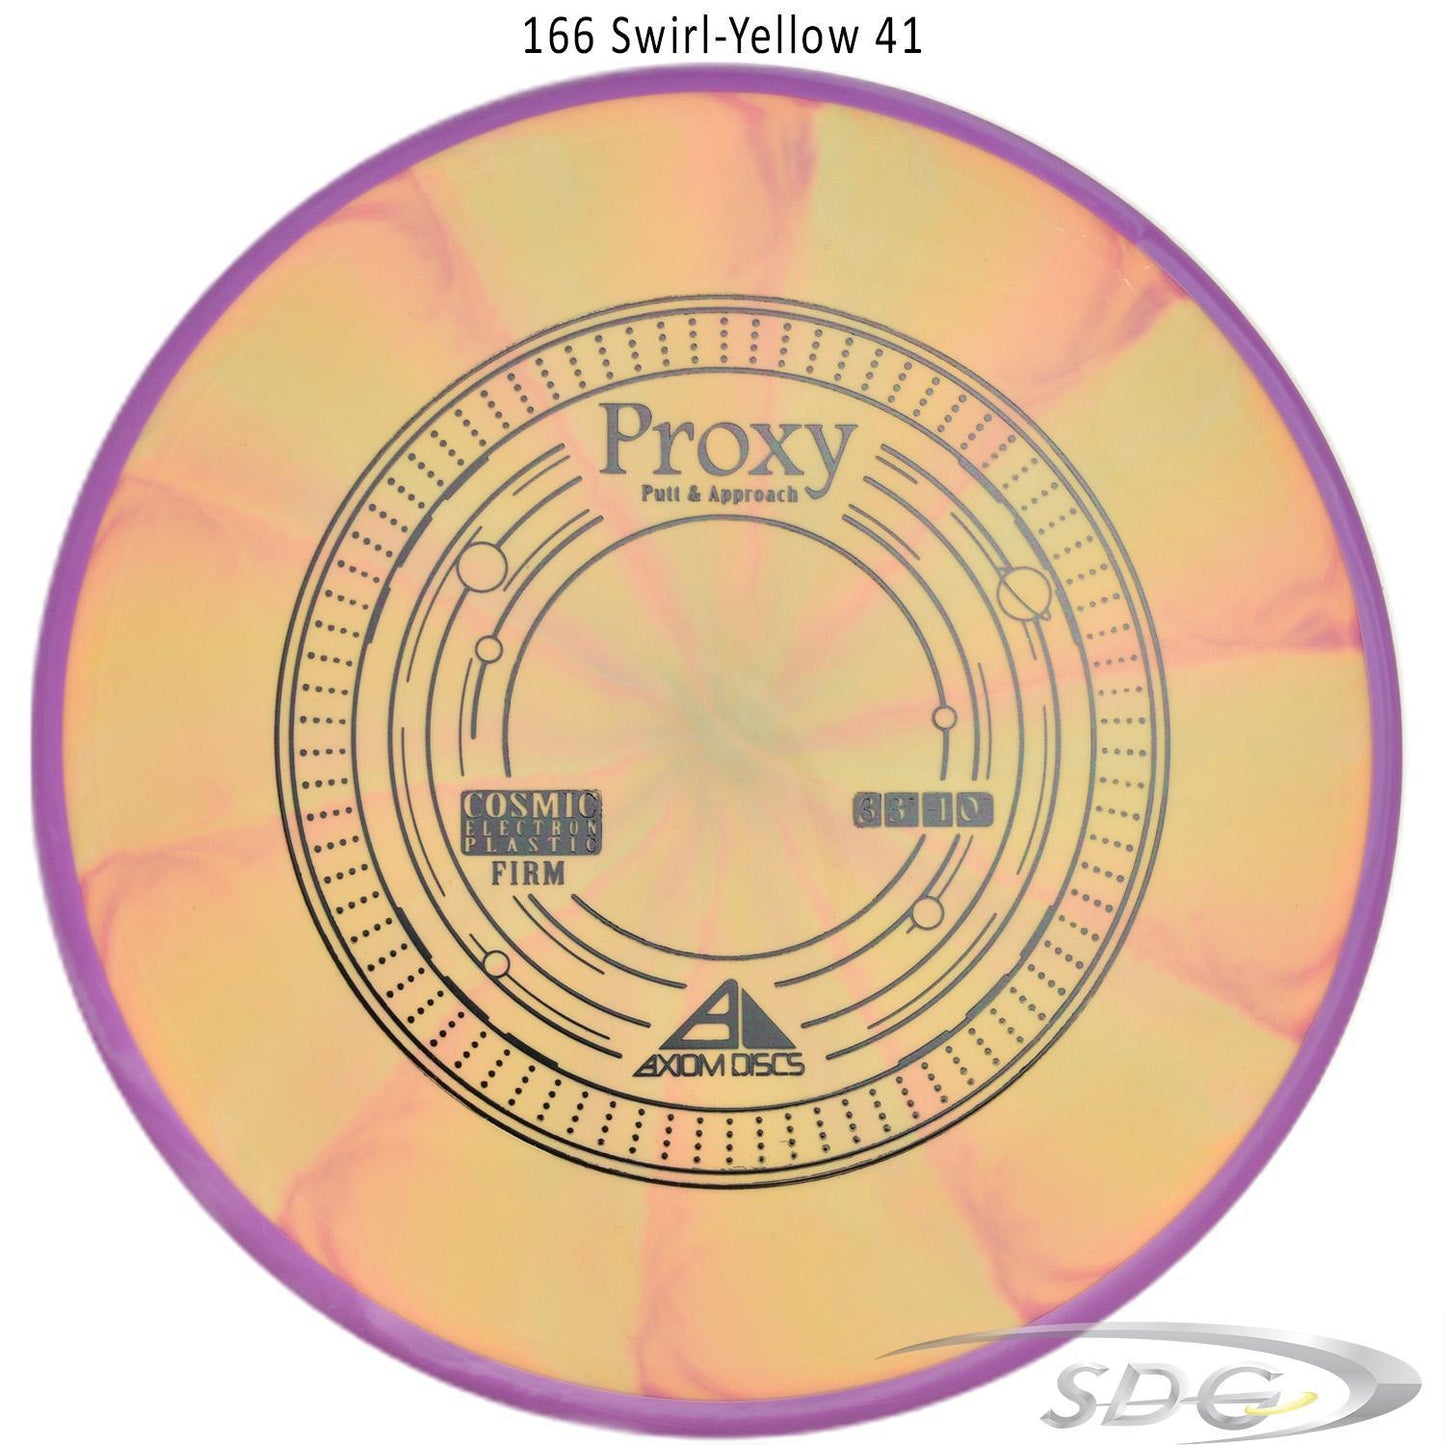 axiom-cosmic-electron-proxy-firm-disc-golf-putt-approach 166 Swirl-Yellow 41 